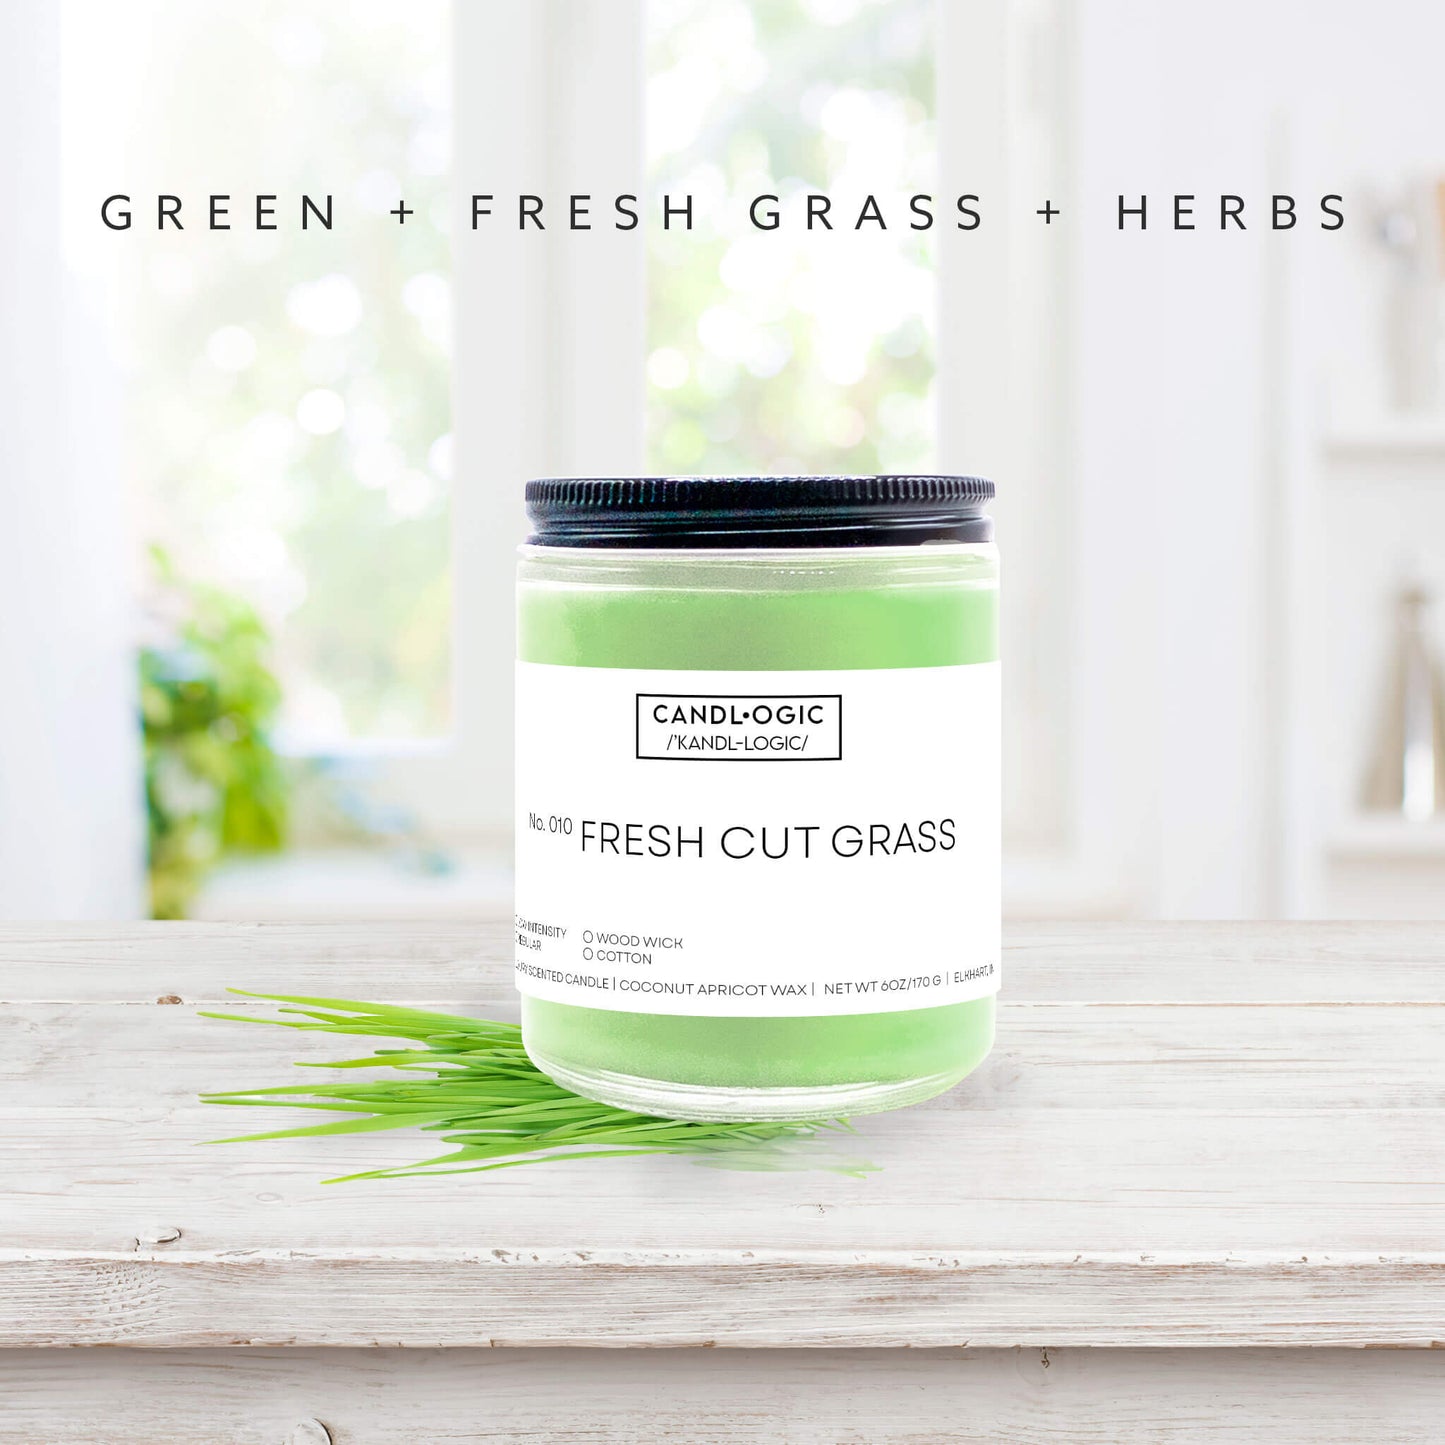 No. 010 Fresh Cut Grass 6 oz. candle